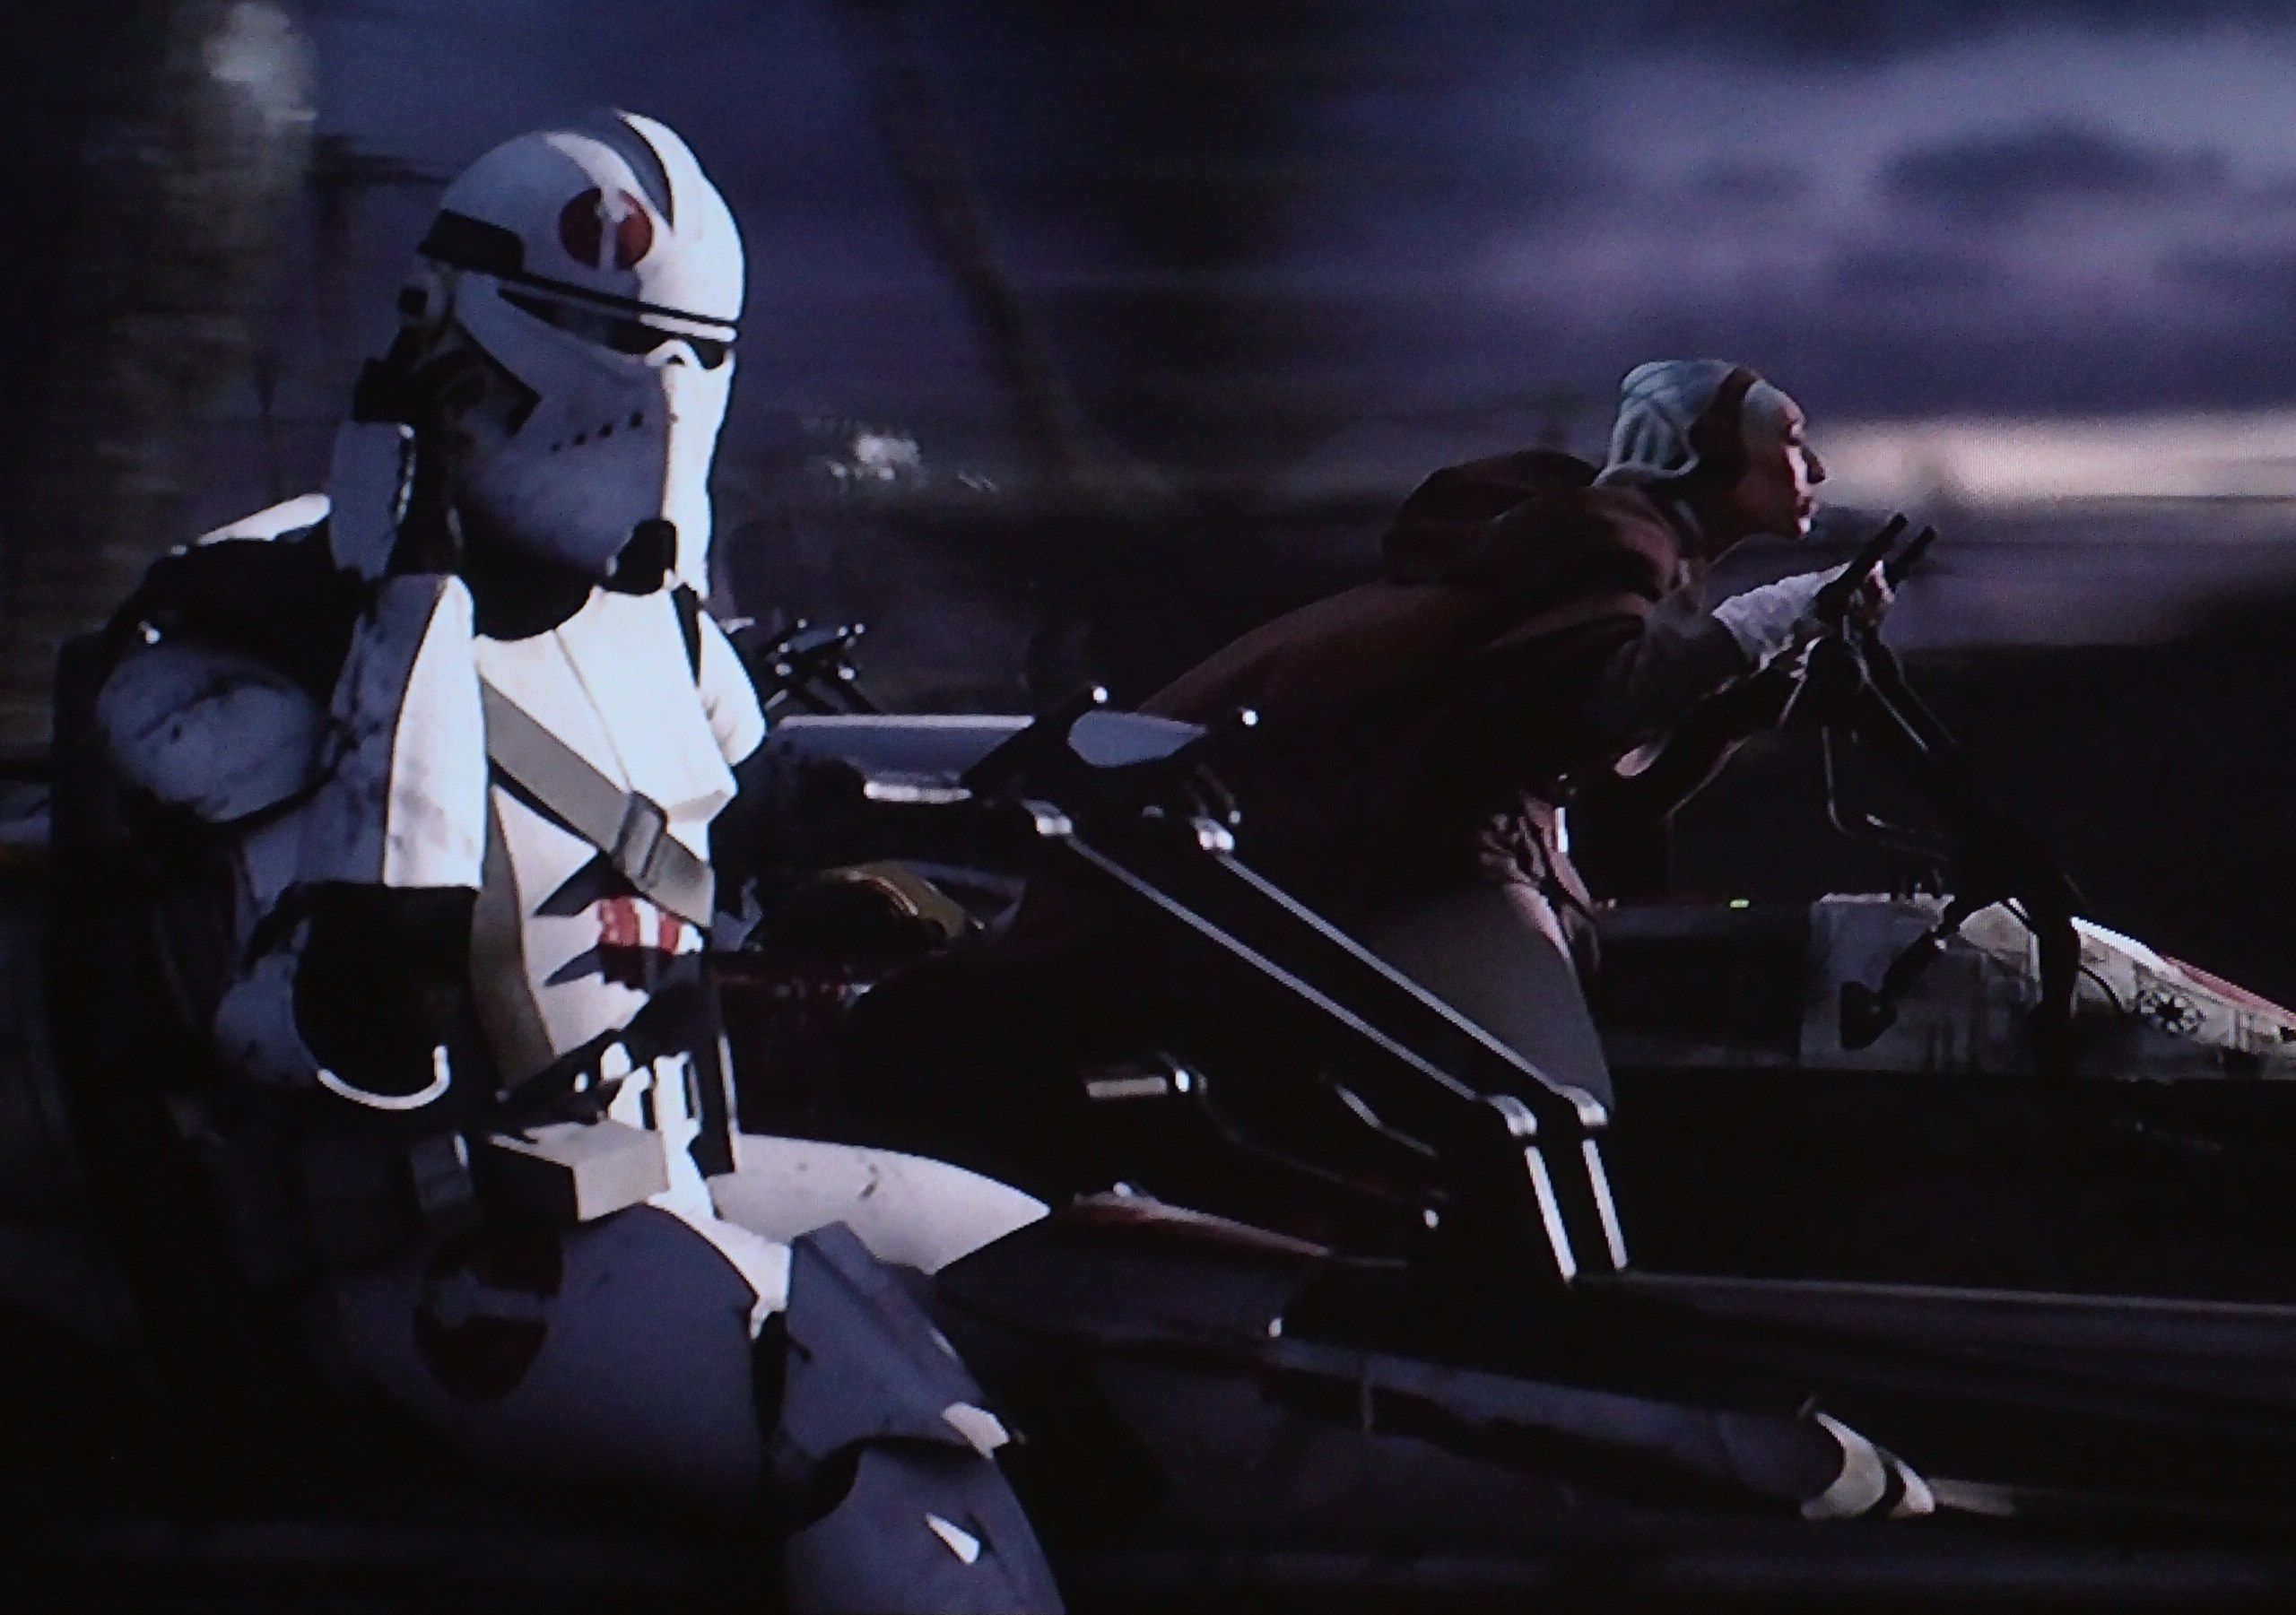 star wars clone trooper wallpaper,personal protective equipment,helmet,fictional character,screenshot,vehicle